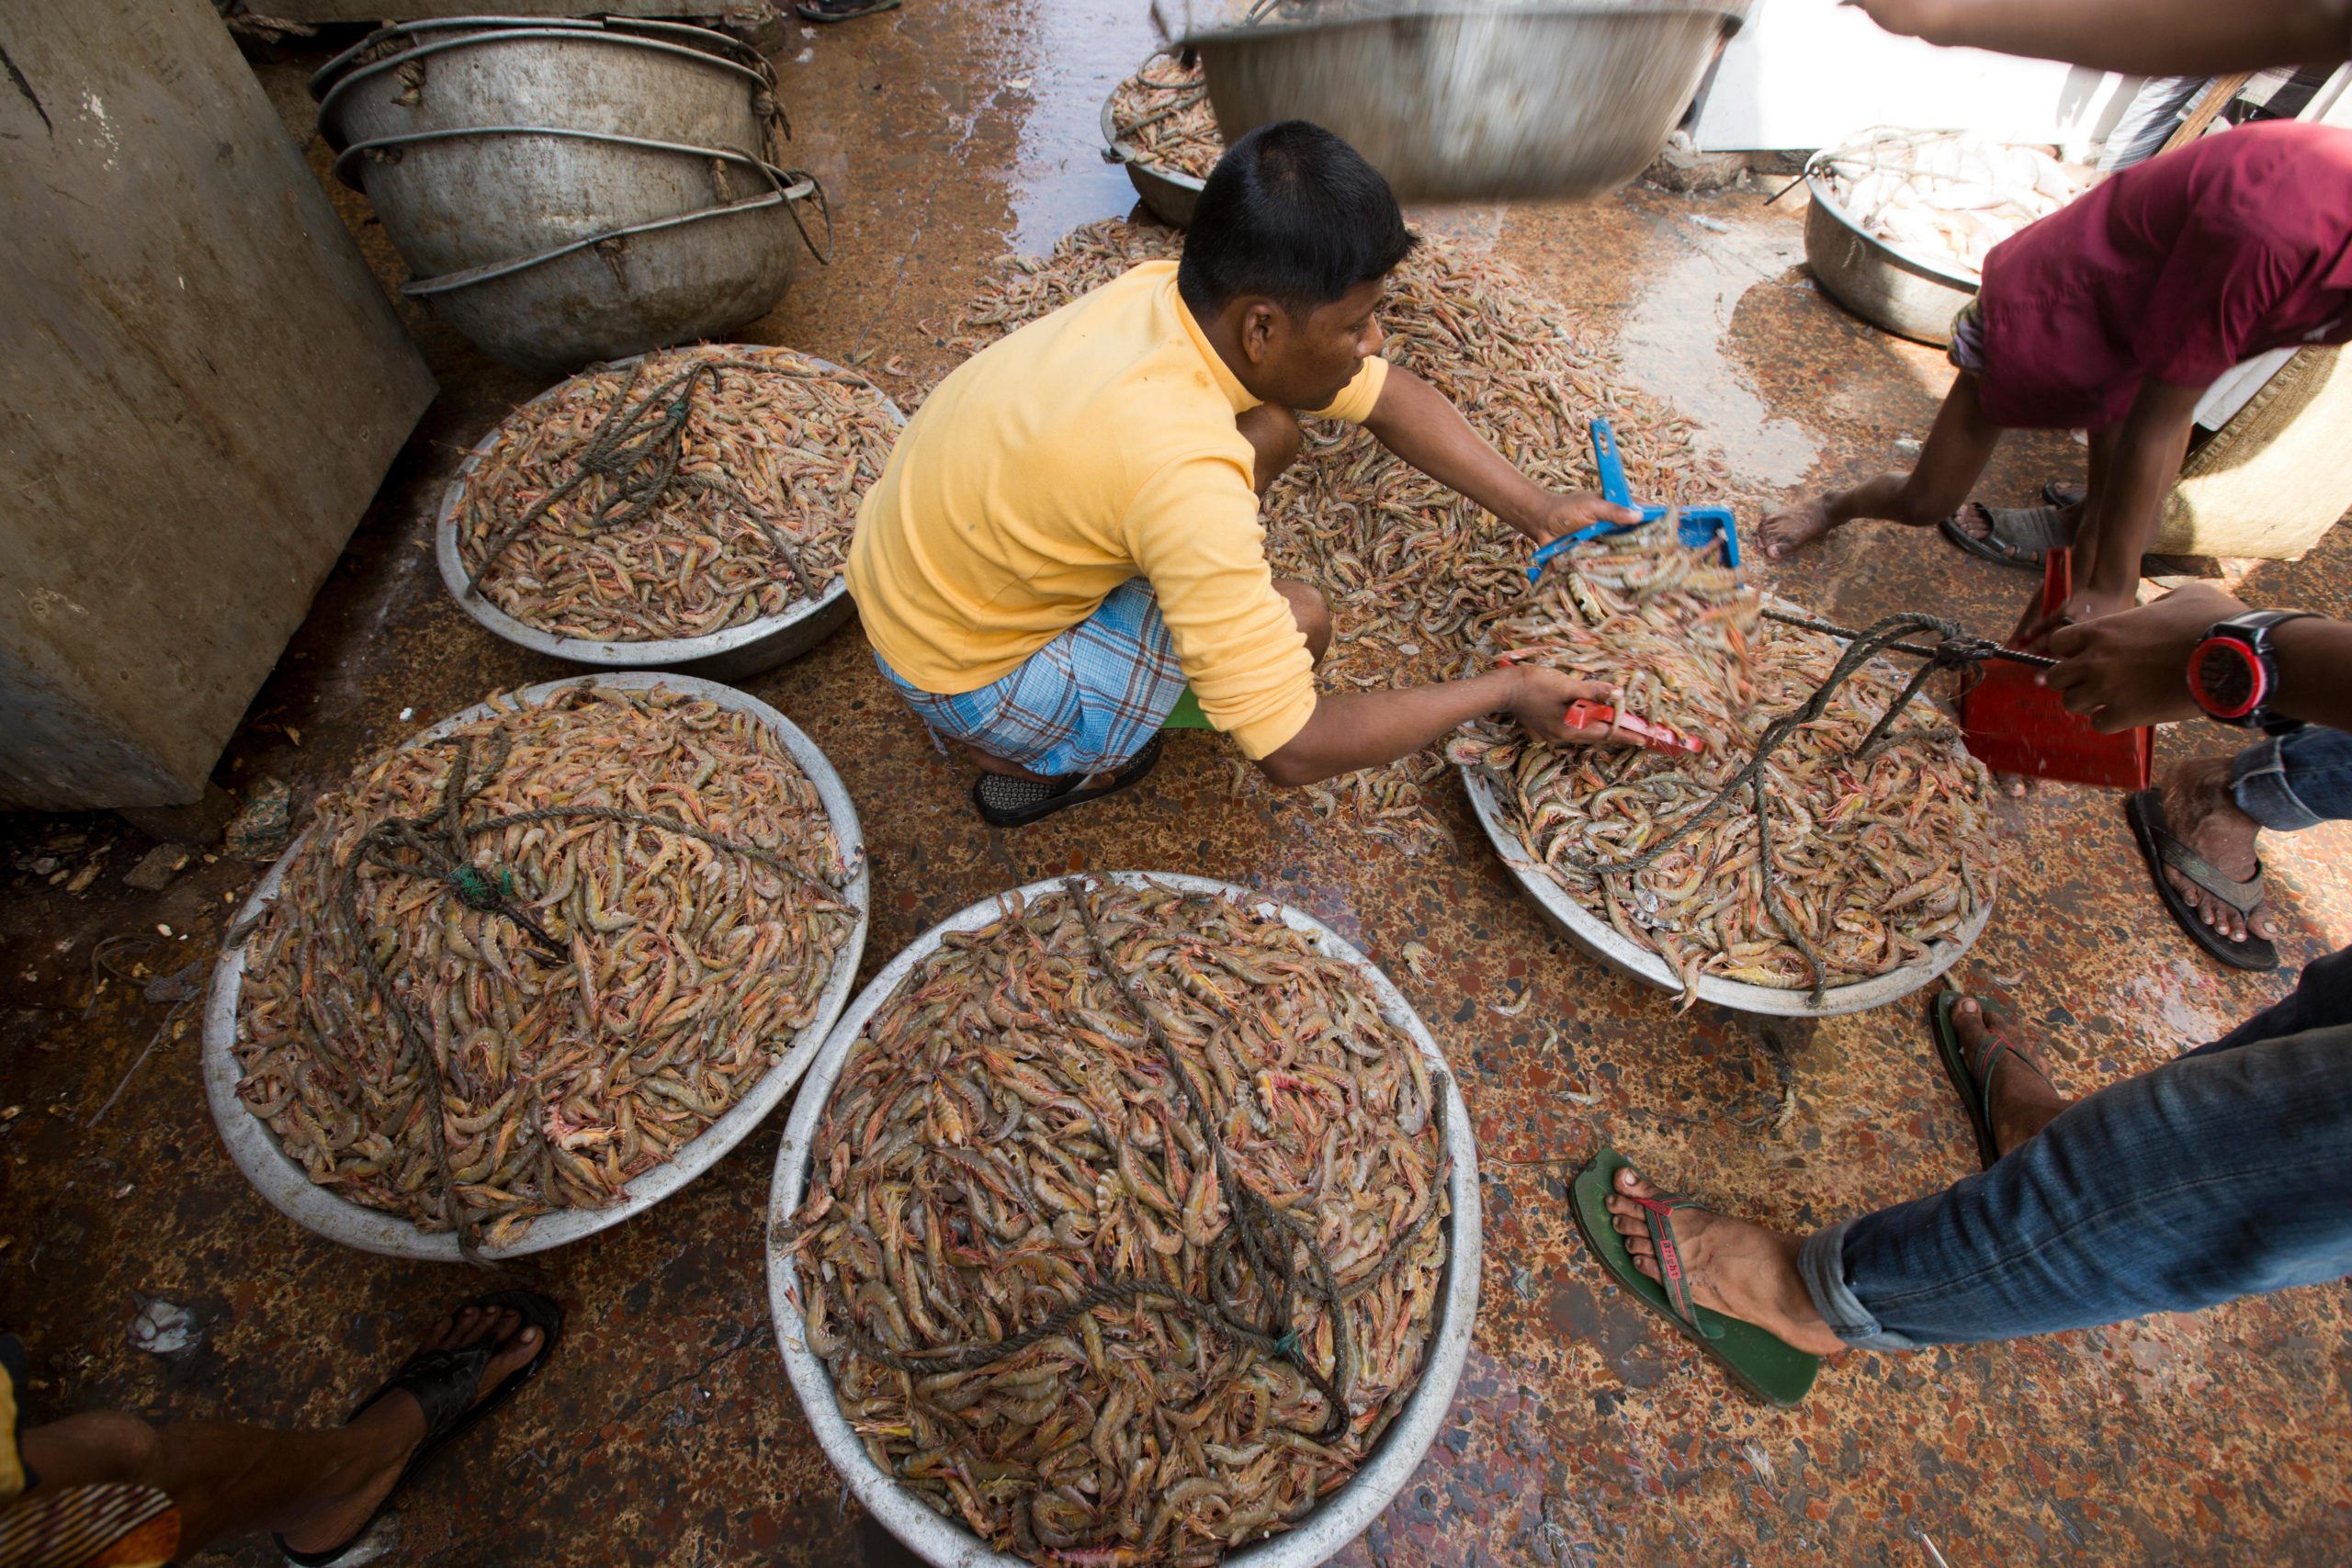 Shrimp are weighed at Fishery Ghat market in Cox’s Bazar, Bangladesh (Image: Muhammad Mostafigur Rahman / Alamy)